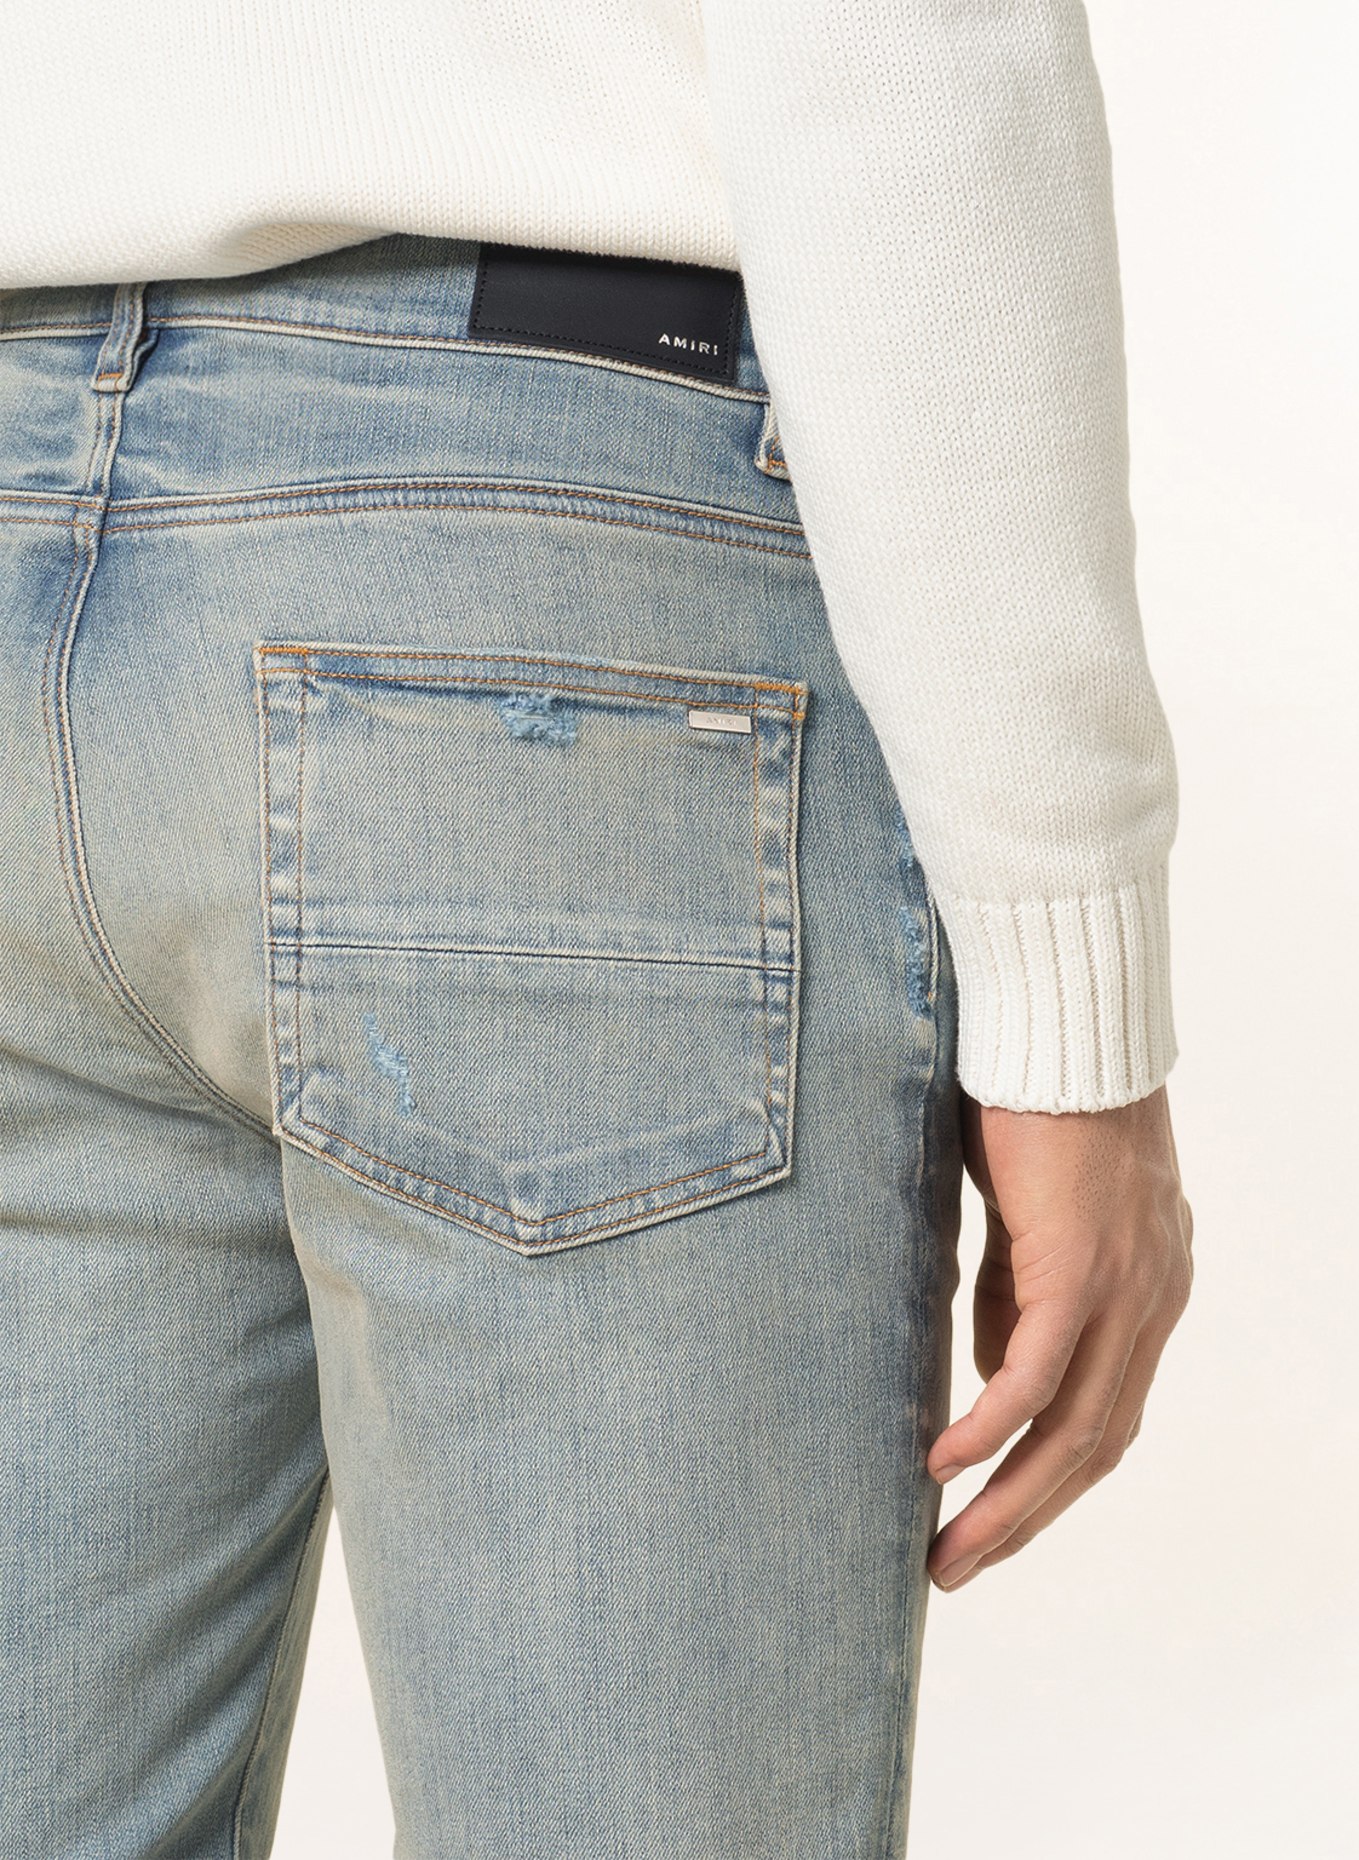 AMIRI Jeans Skinny Fit, Farbe: 408 CLAY INDIGO (Bild 5)